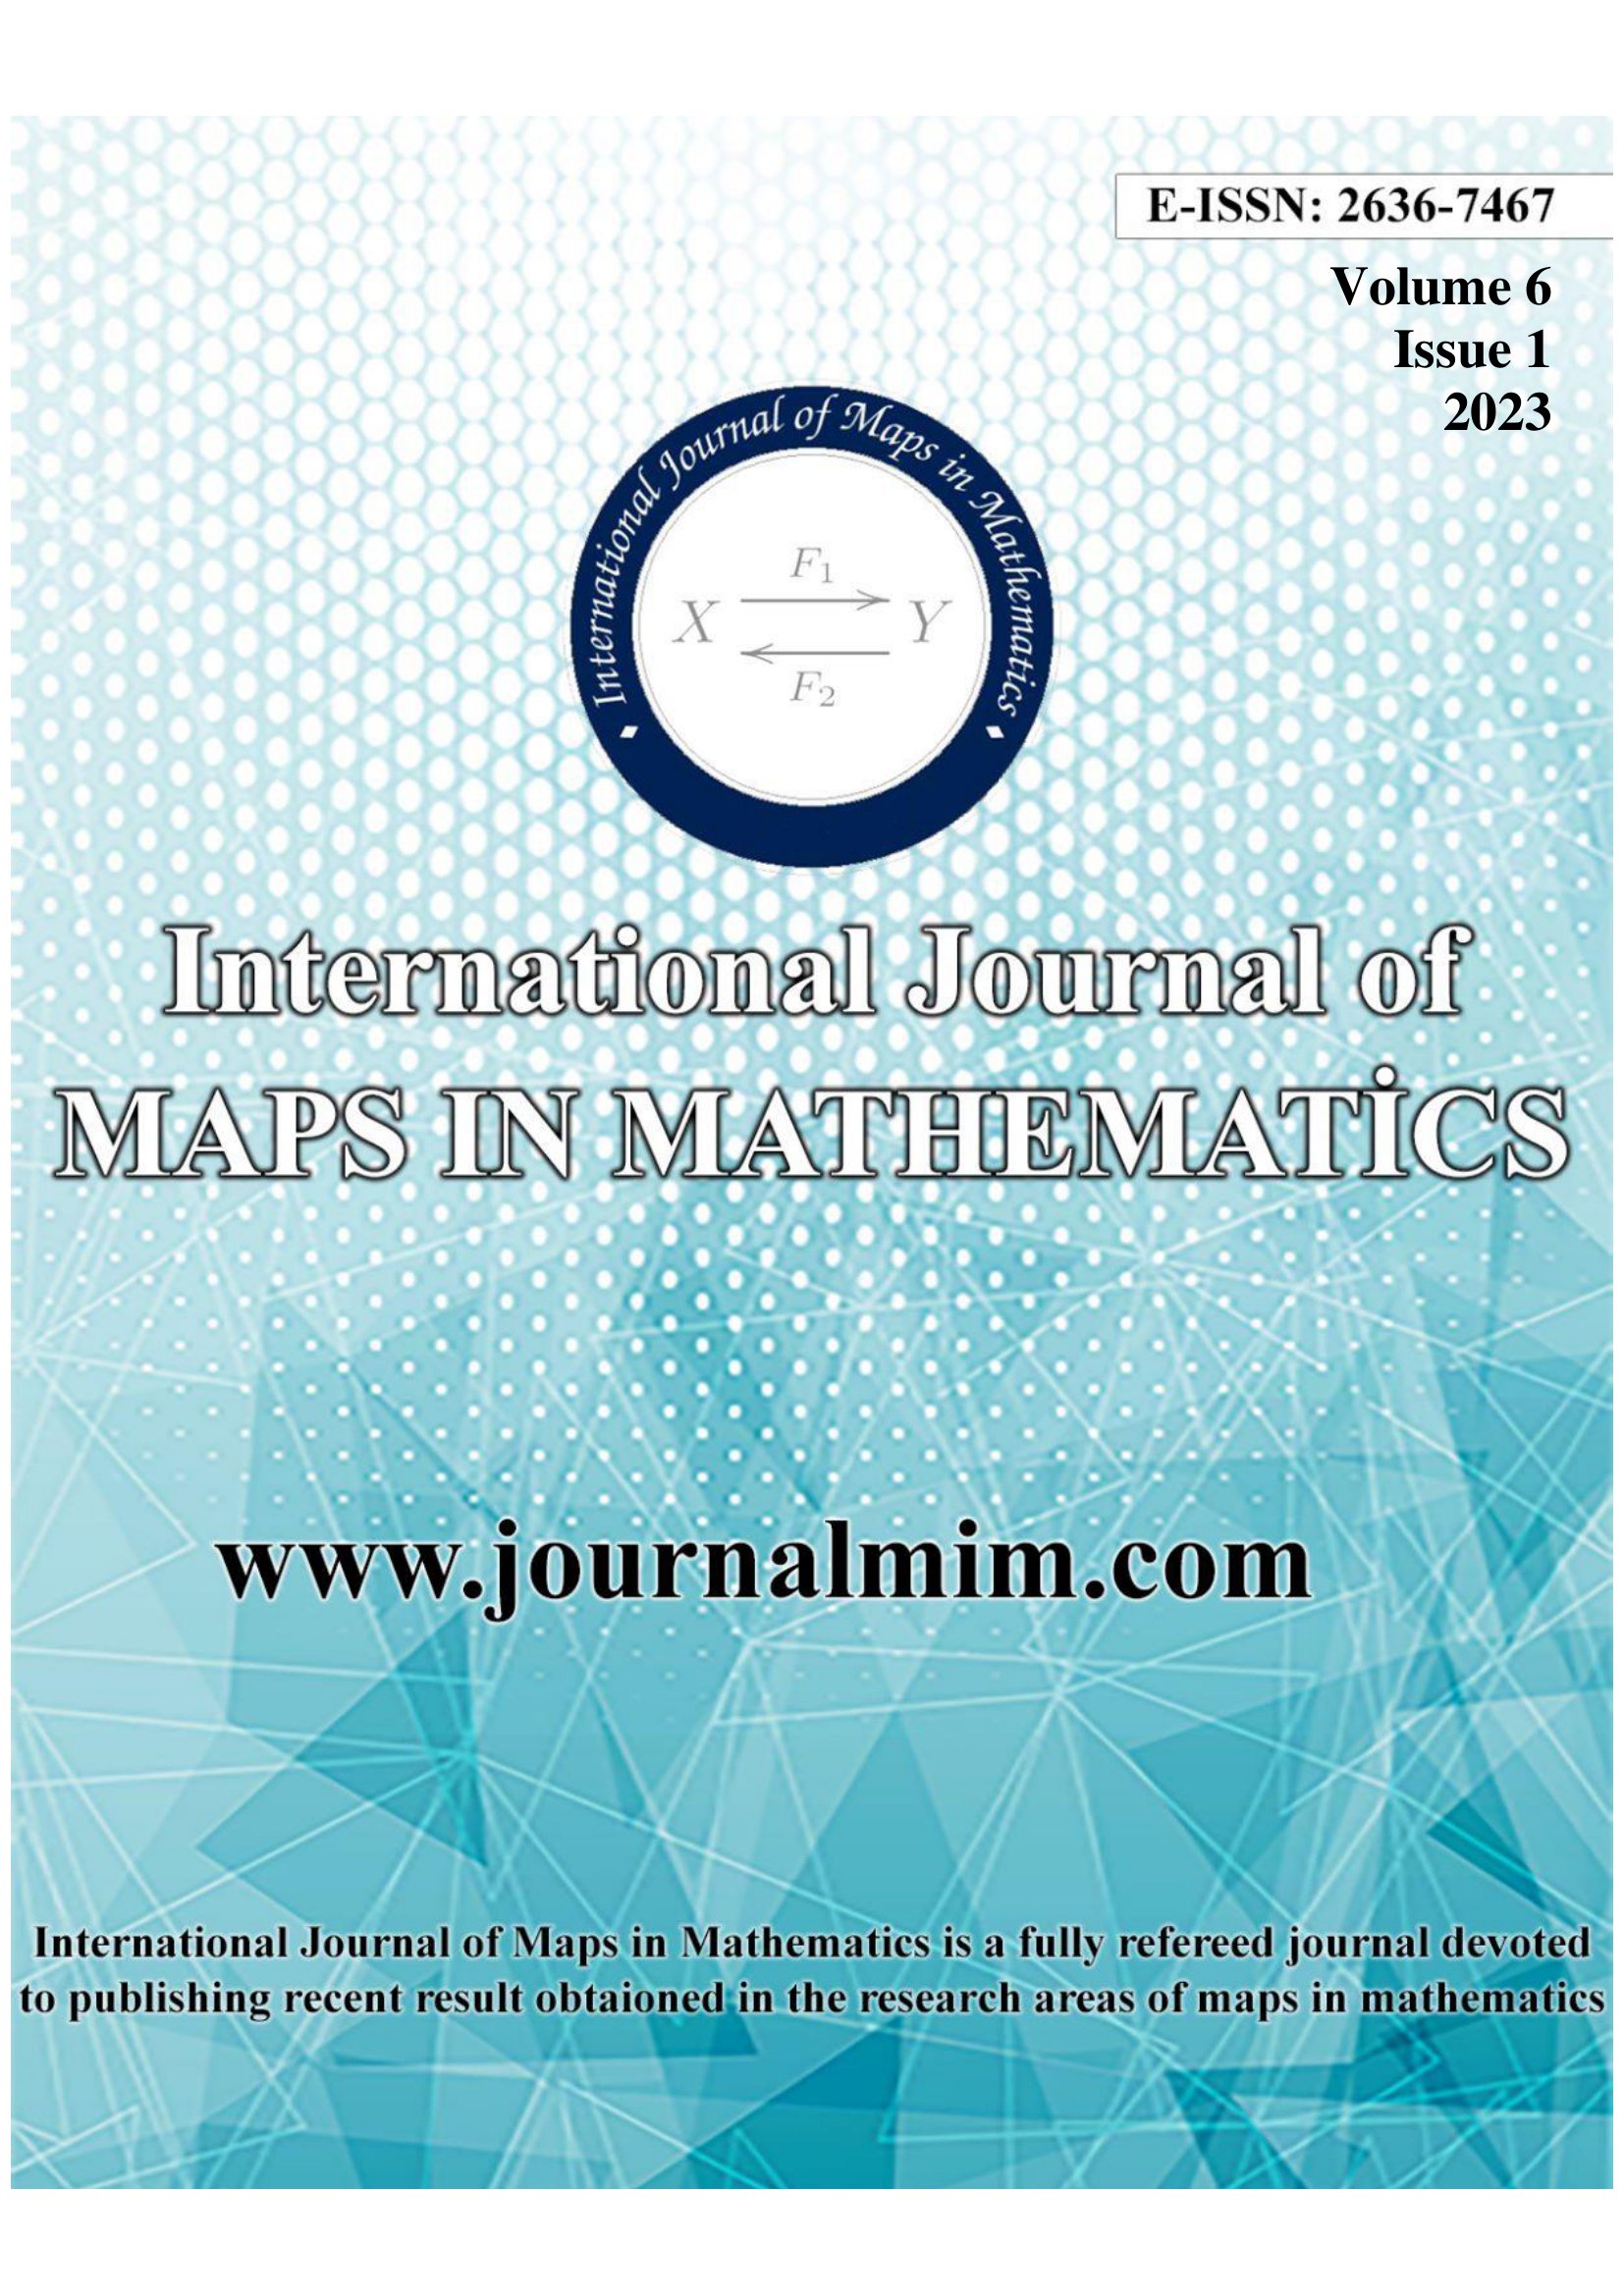 International Journal of Maps in Mathematics Volume 6 Issue 1 2023